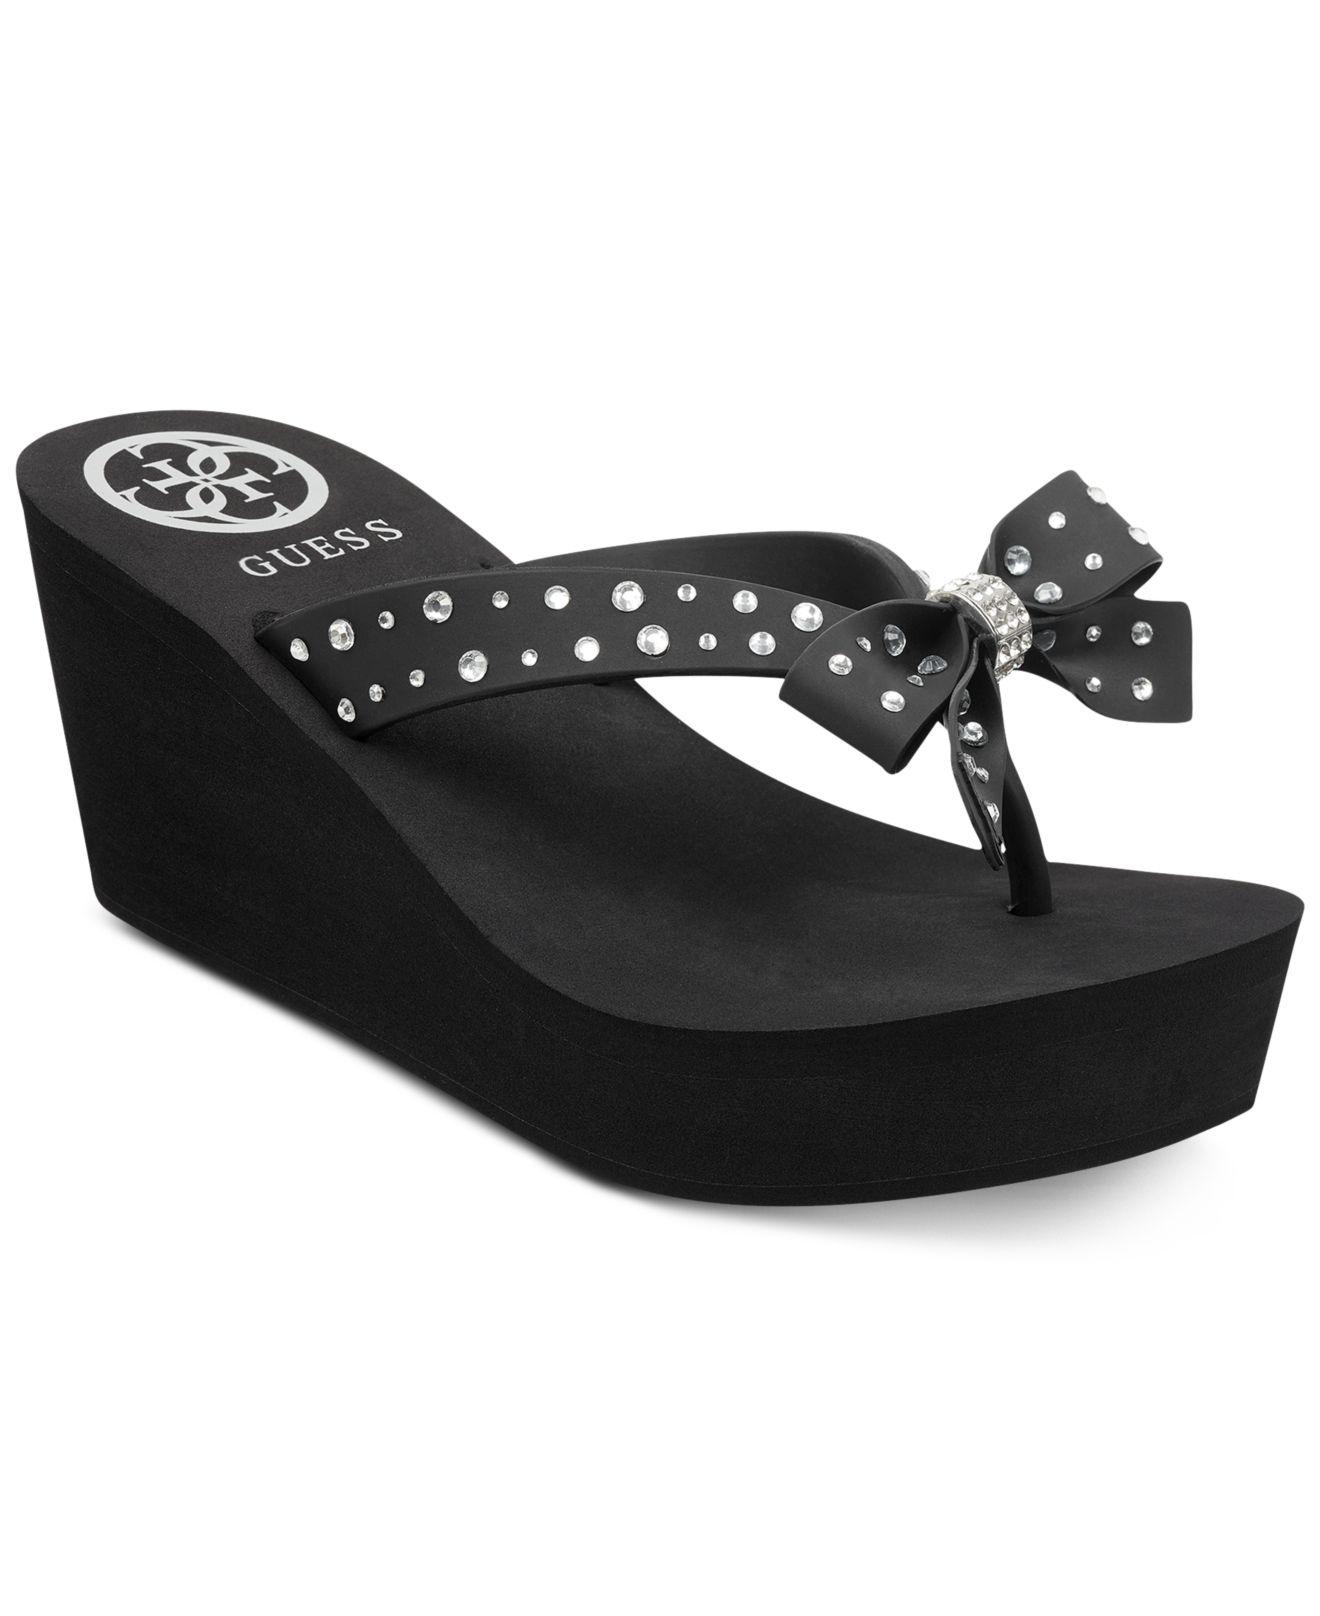 Guess Siarra Flip-flop Wedge Sandals in Black | Lyst